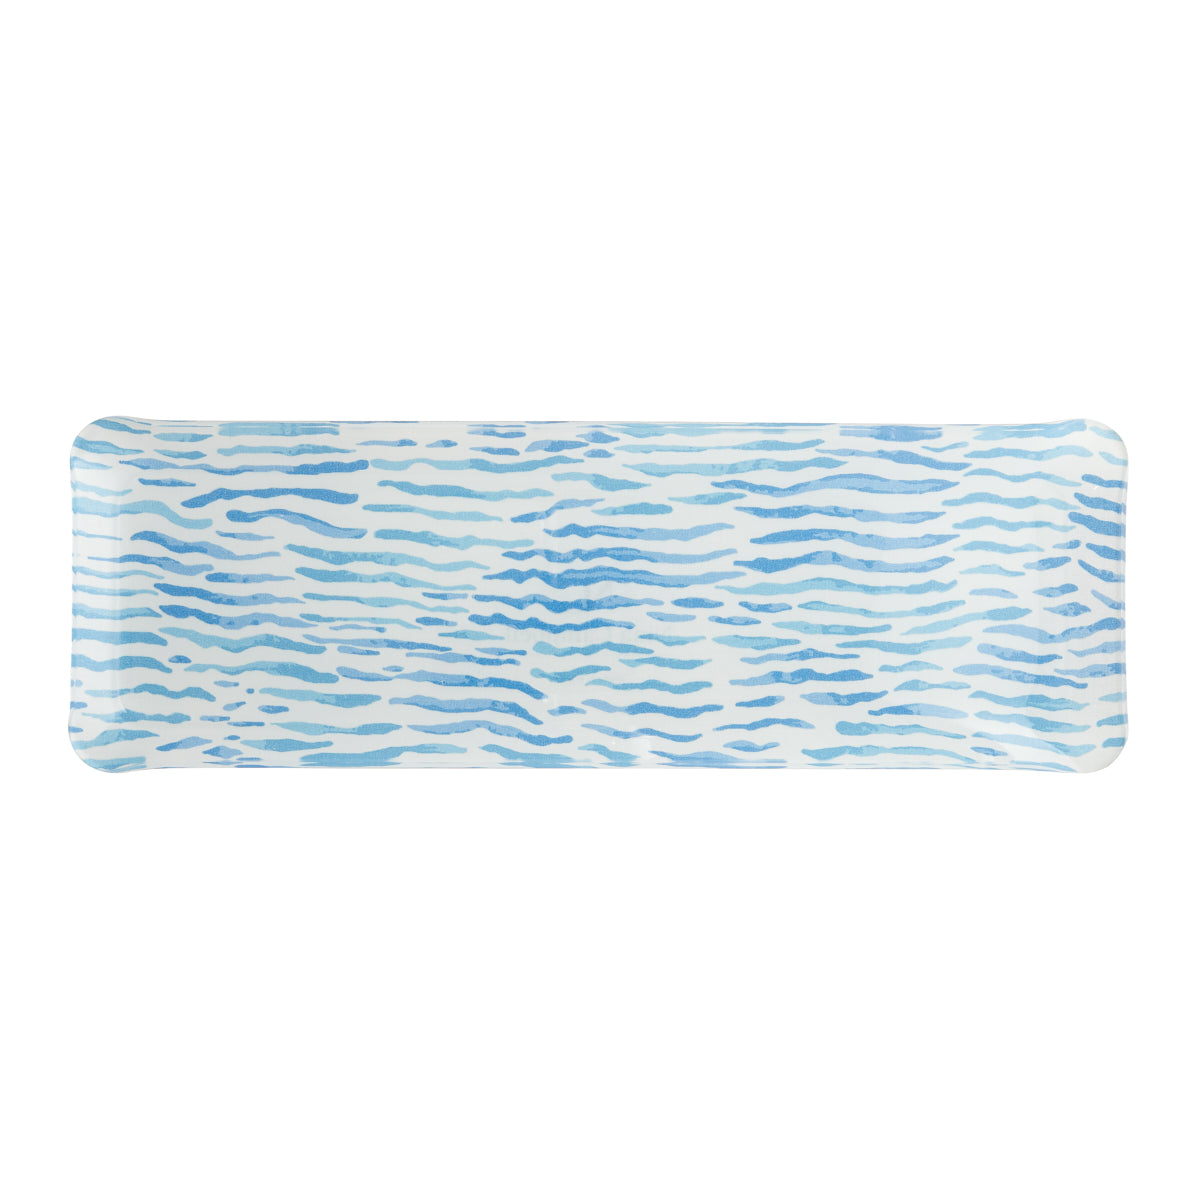 Nina Campbell Fabric Tray Oblong - Arles Blue